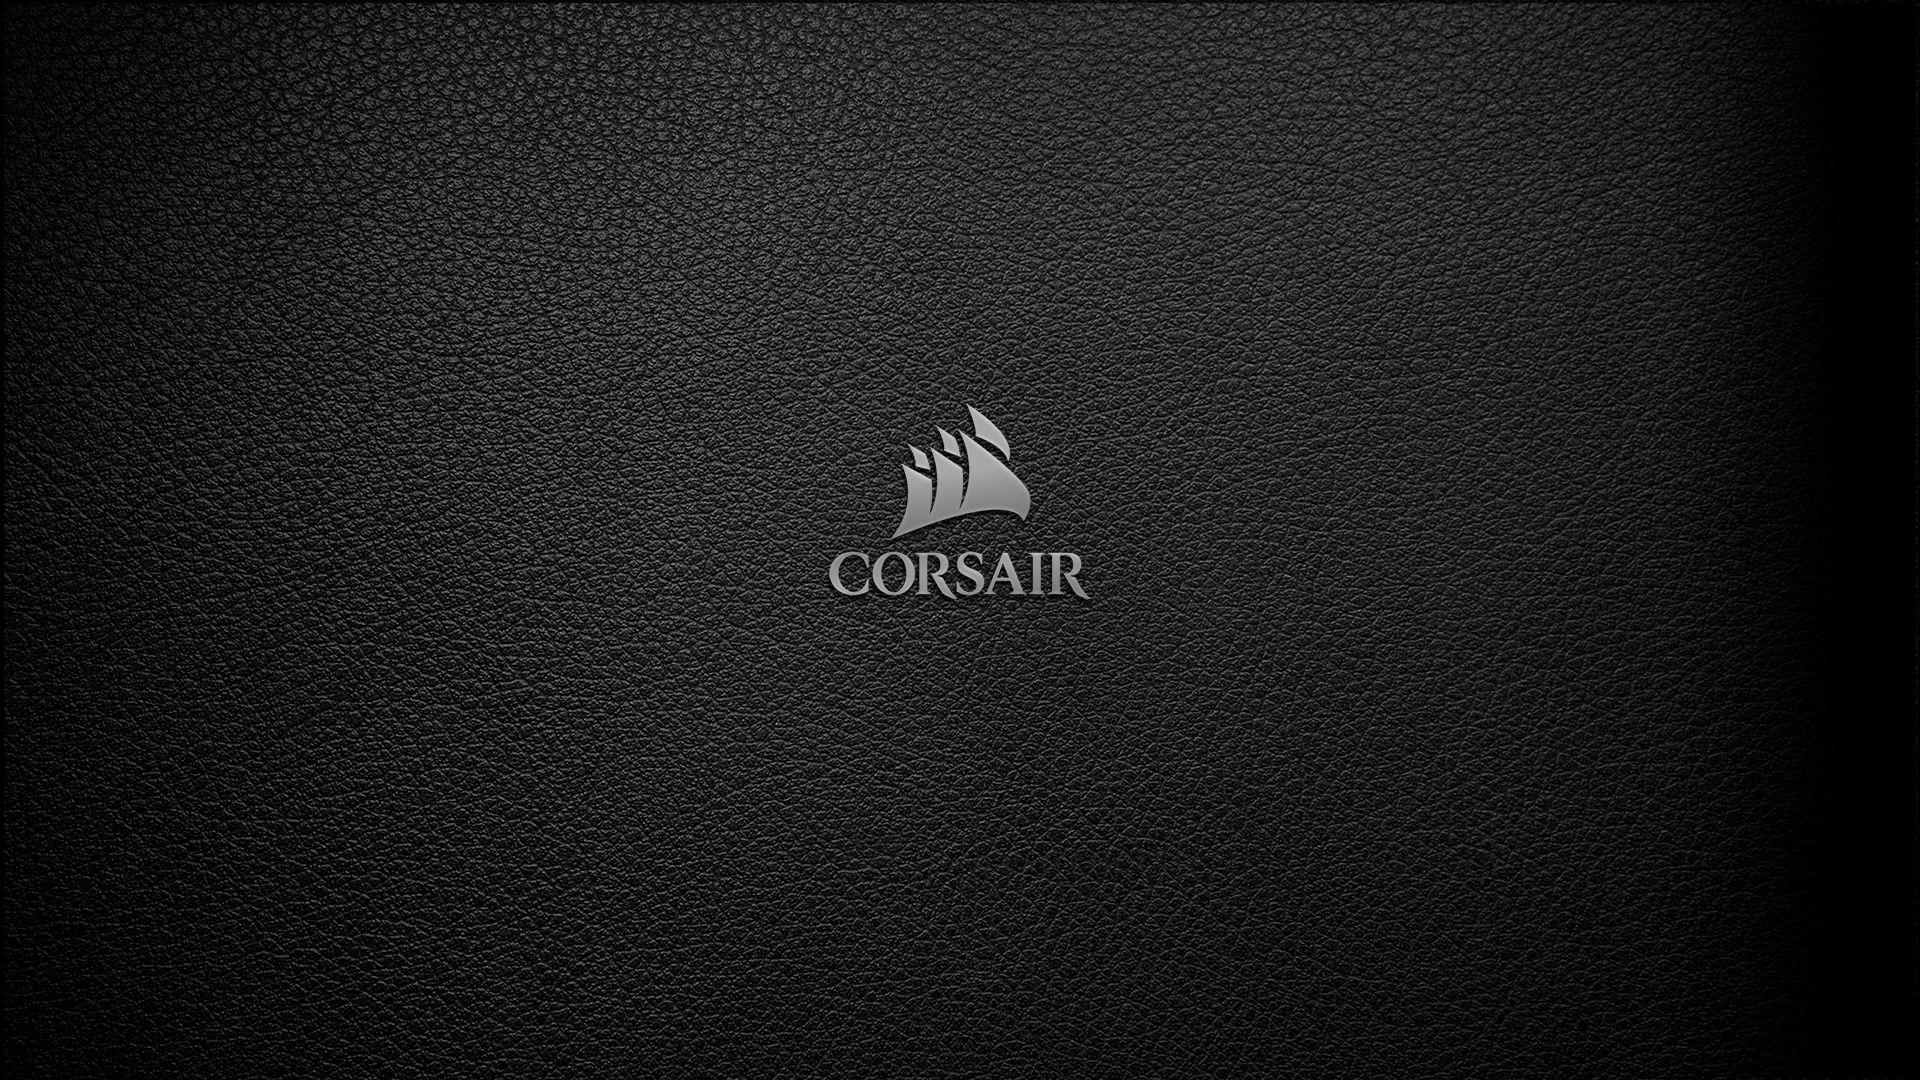 Corsair Logo - CORSAIR WALLPAPERS